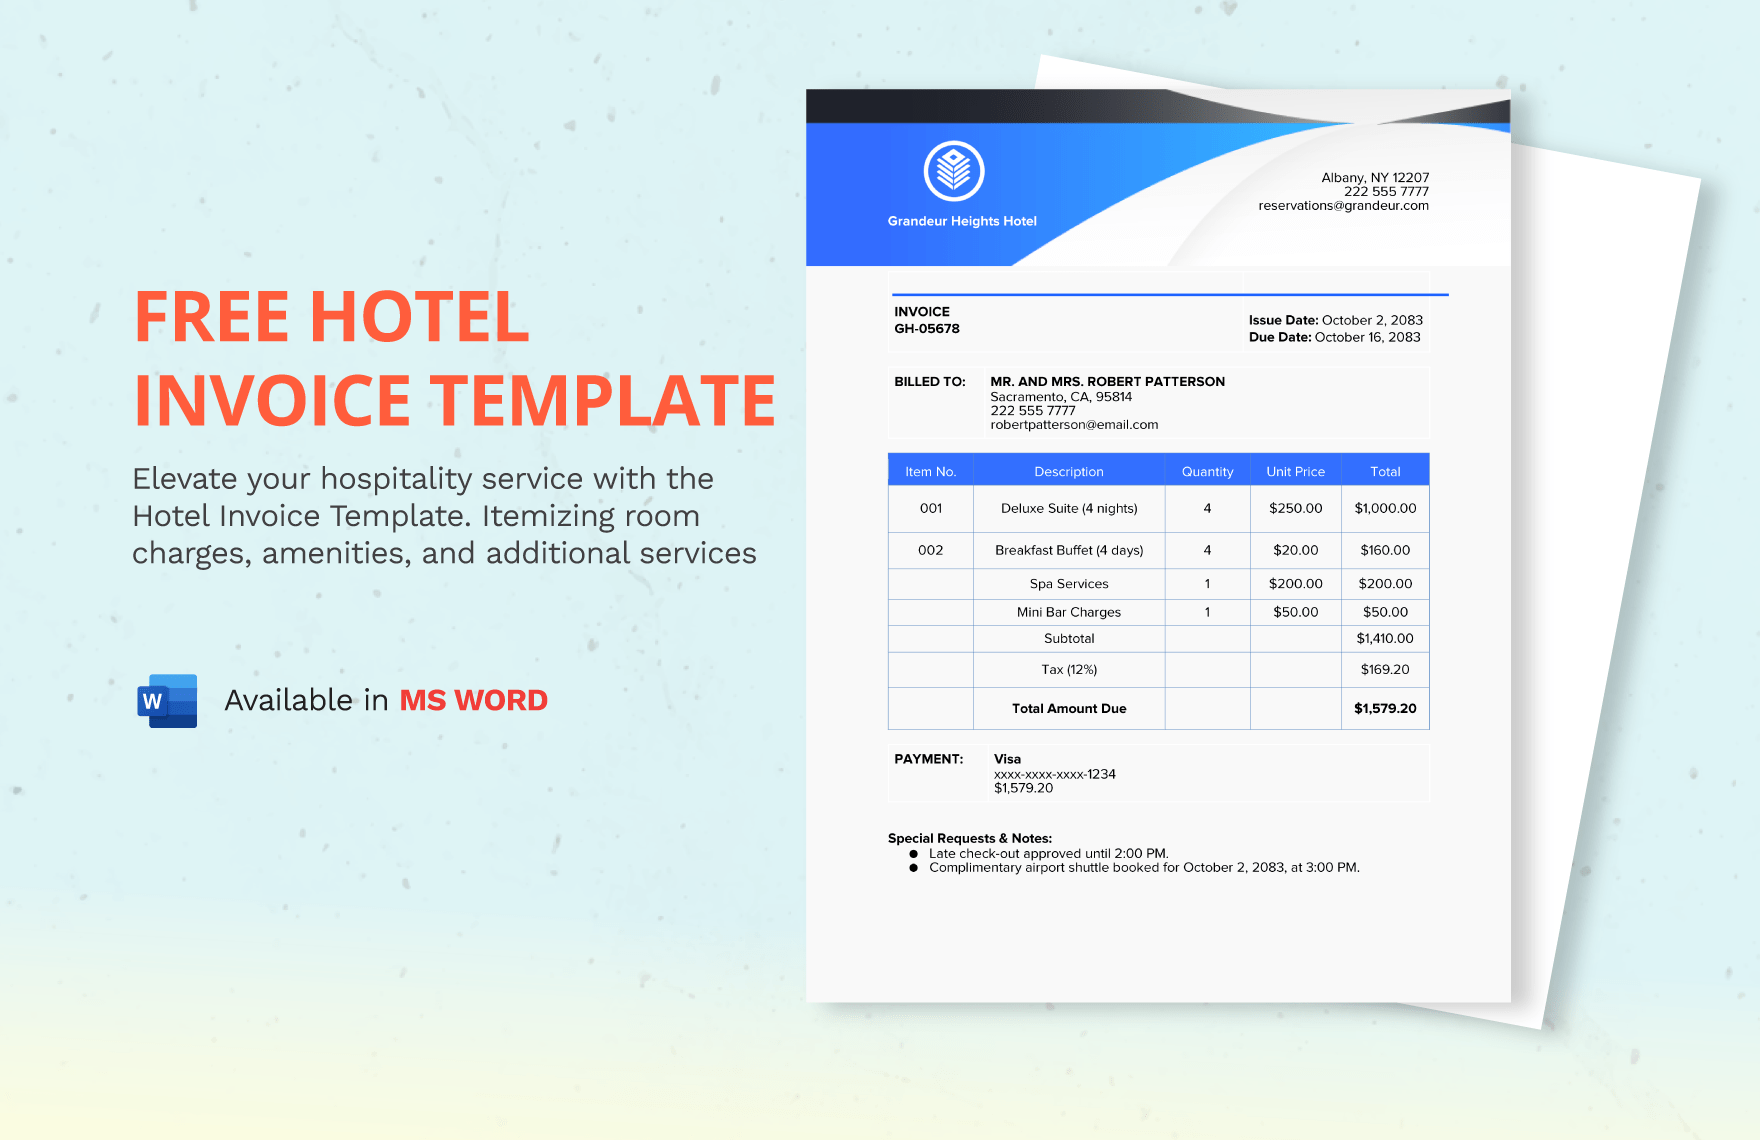 Hotel Invoice Template